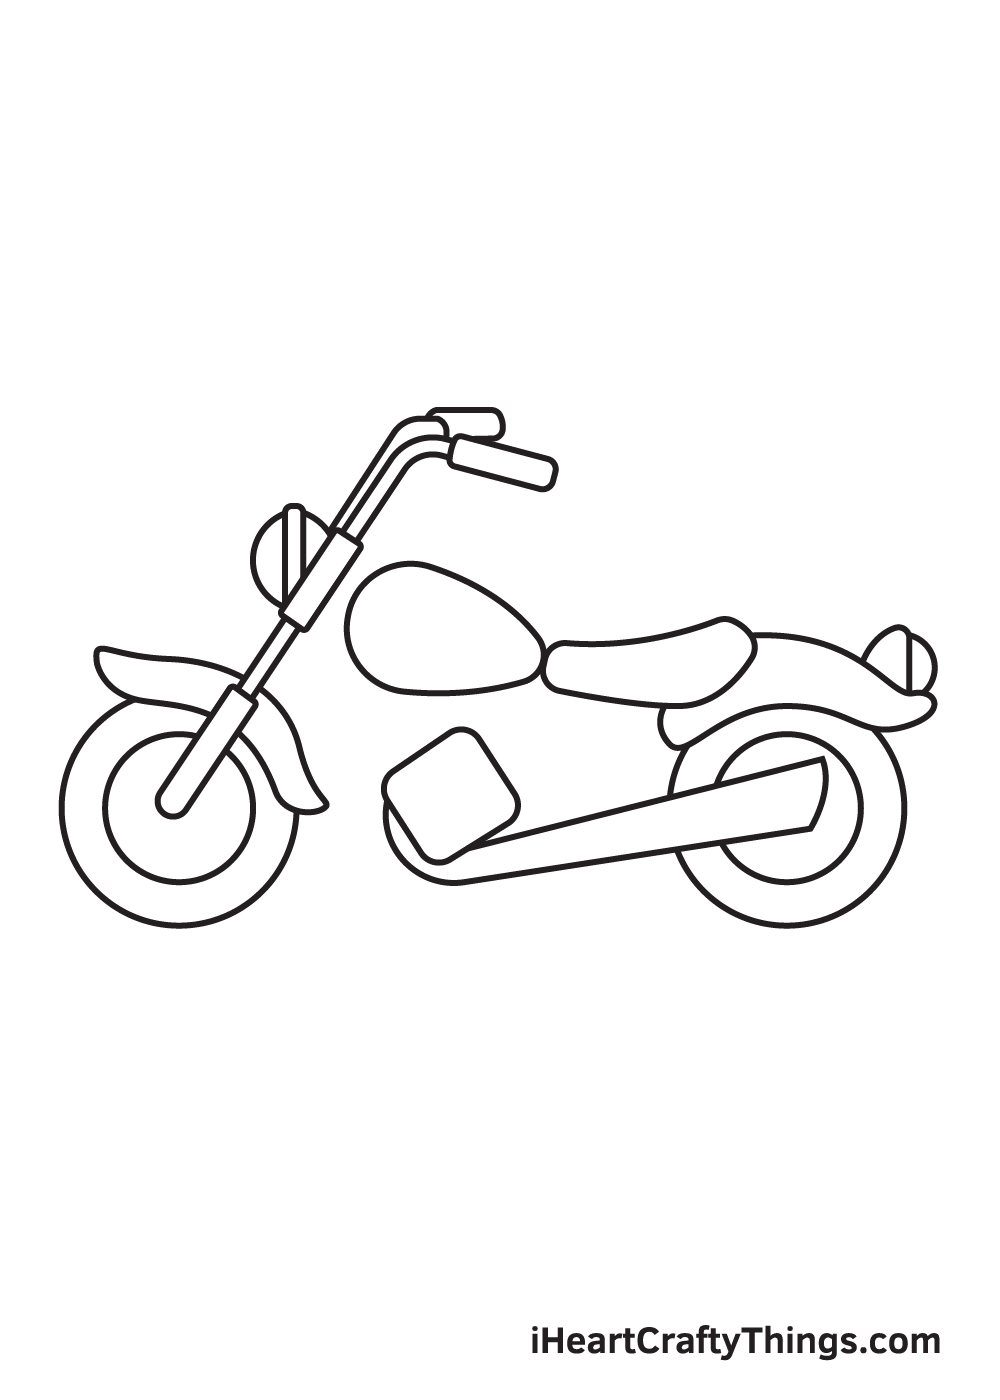 Basic Bike Drawing - ClipArt Best